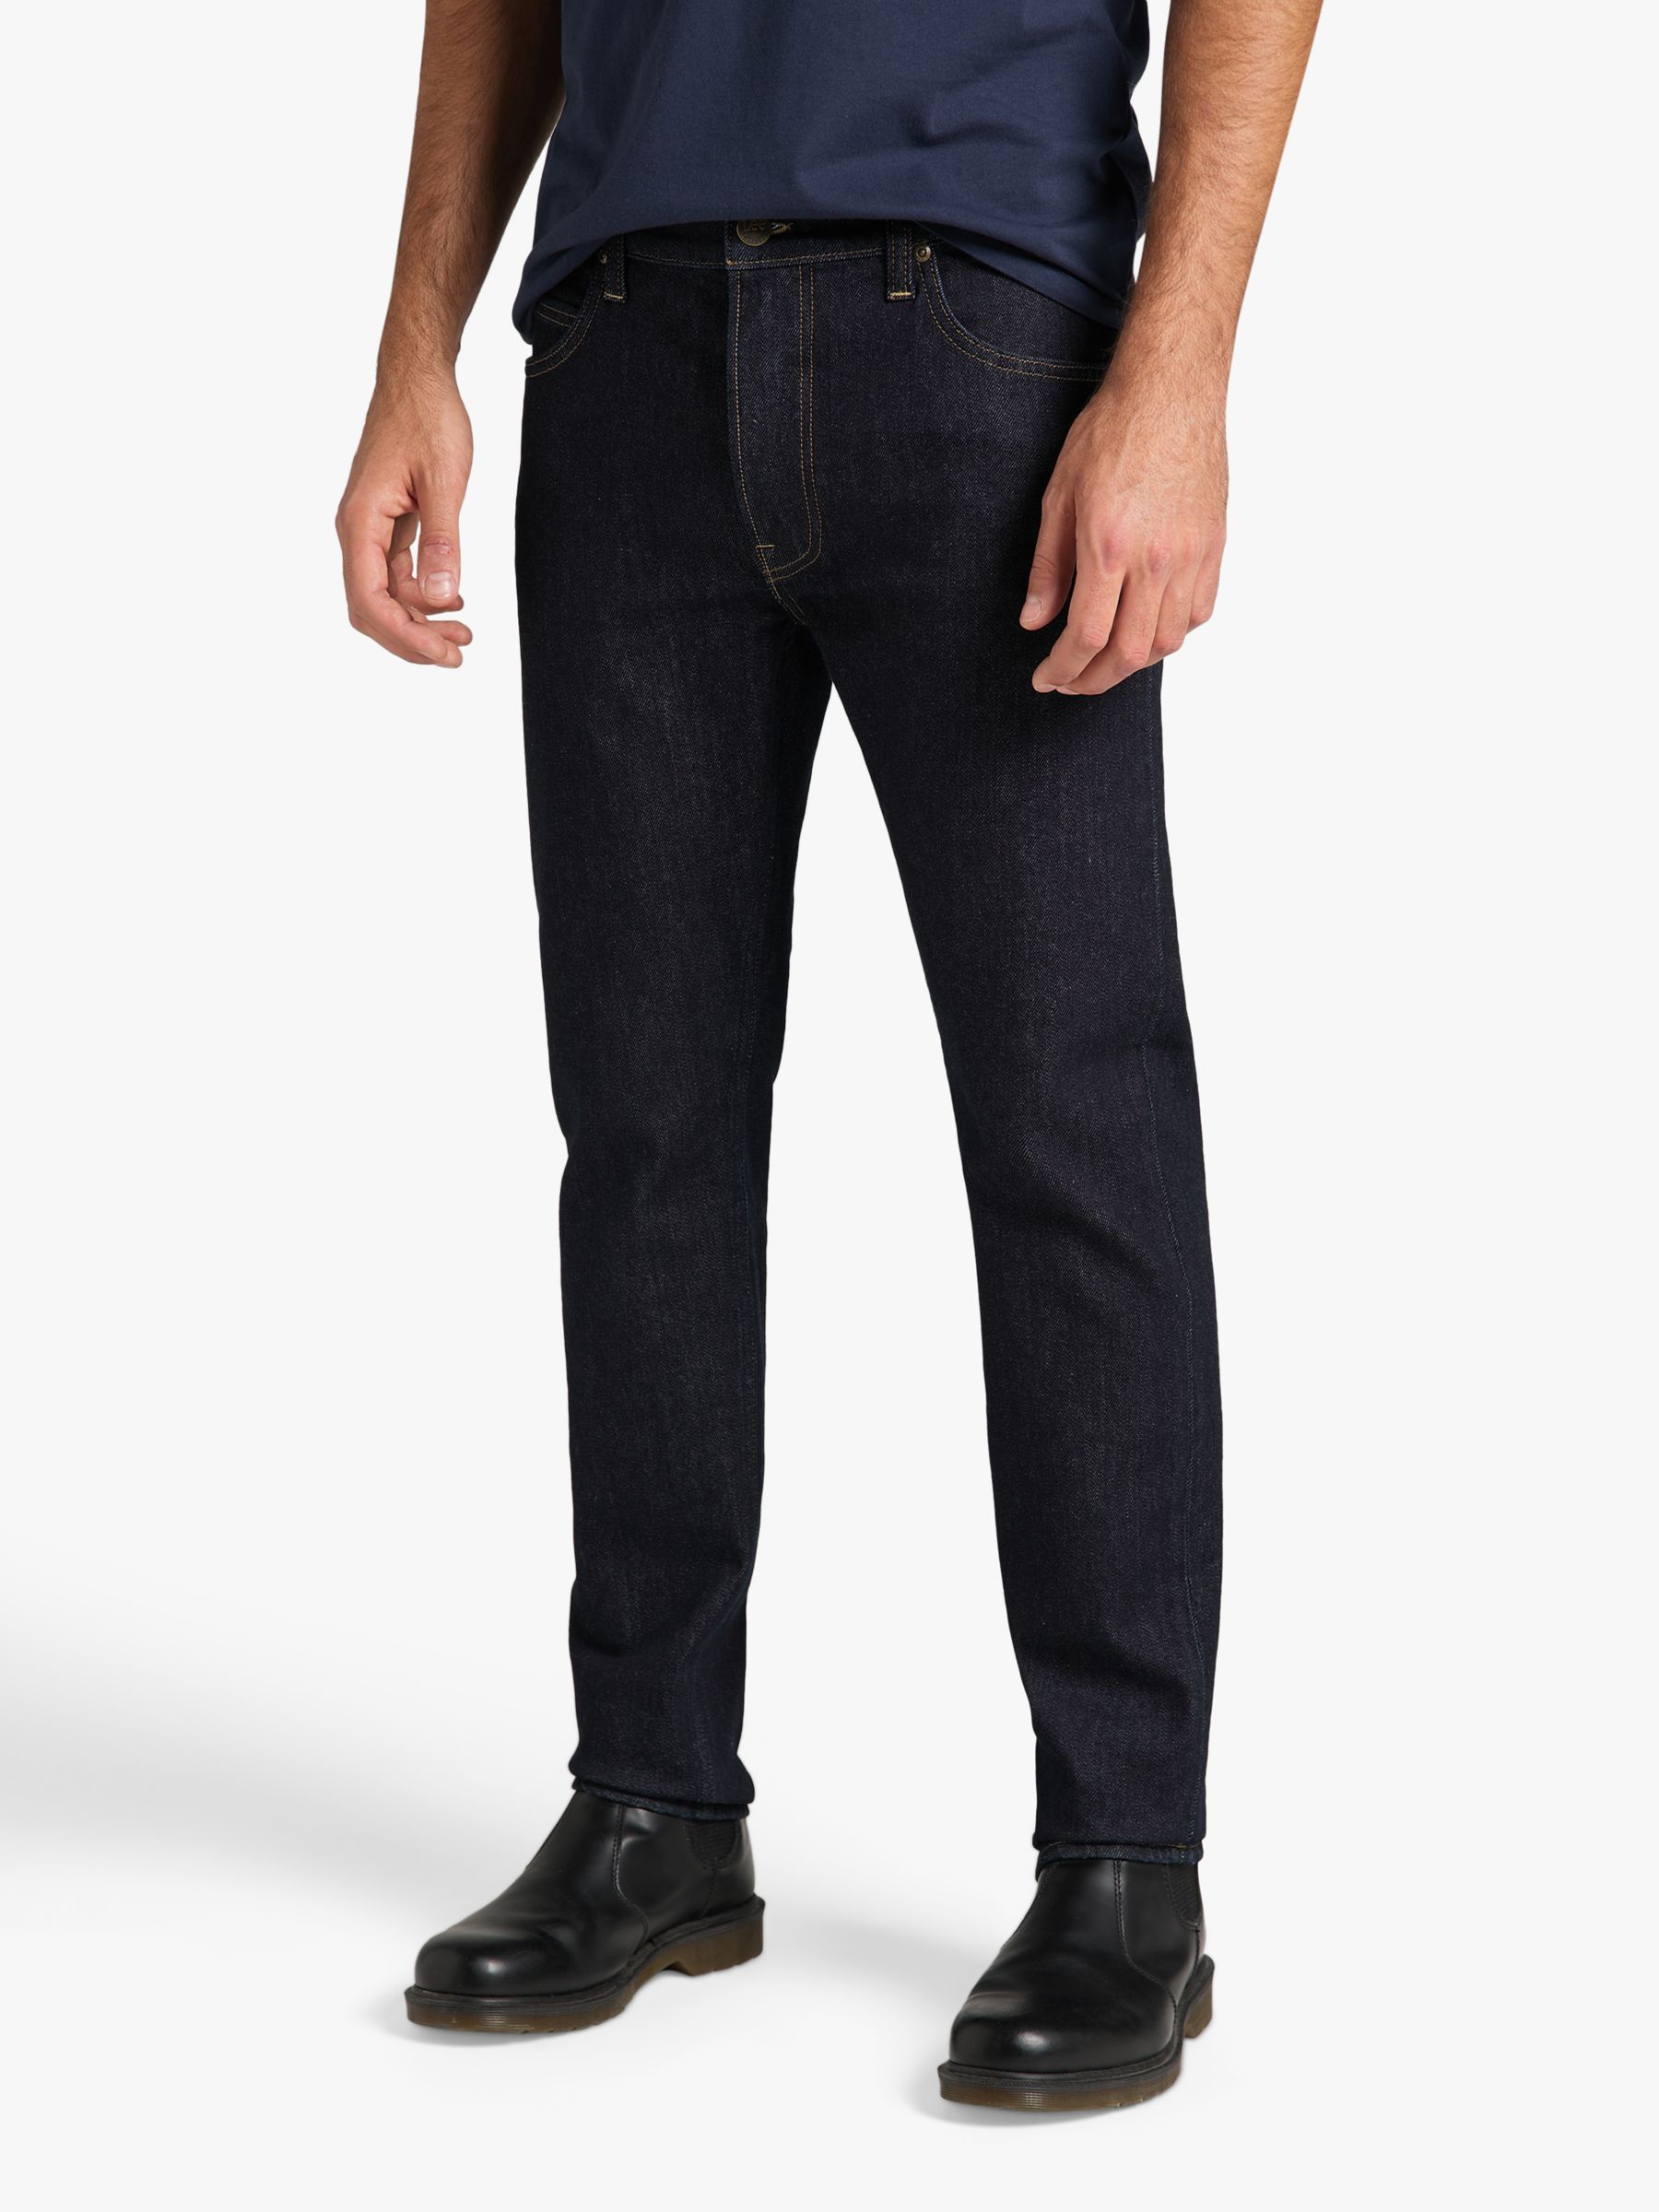 Lee Rider Slim Fit Denim Jeans, Blue at John Lewis & Partners